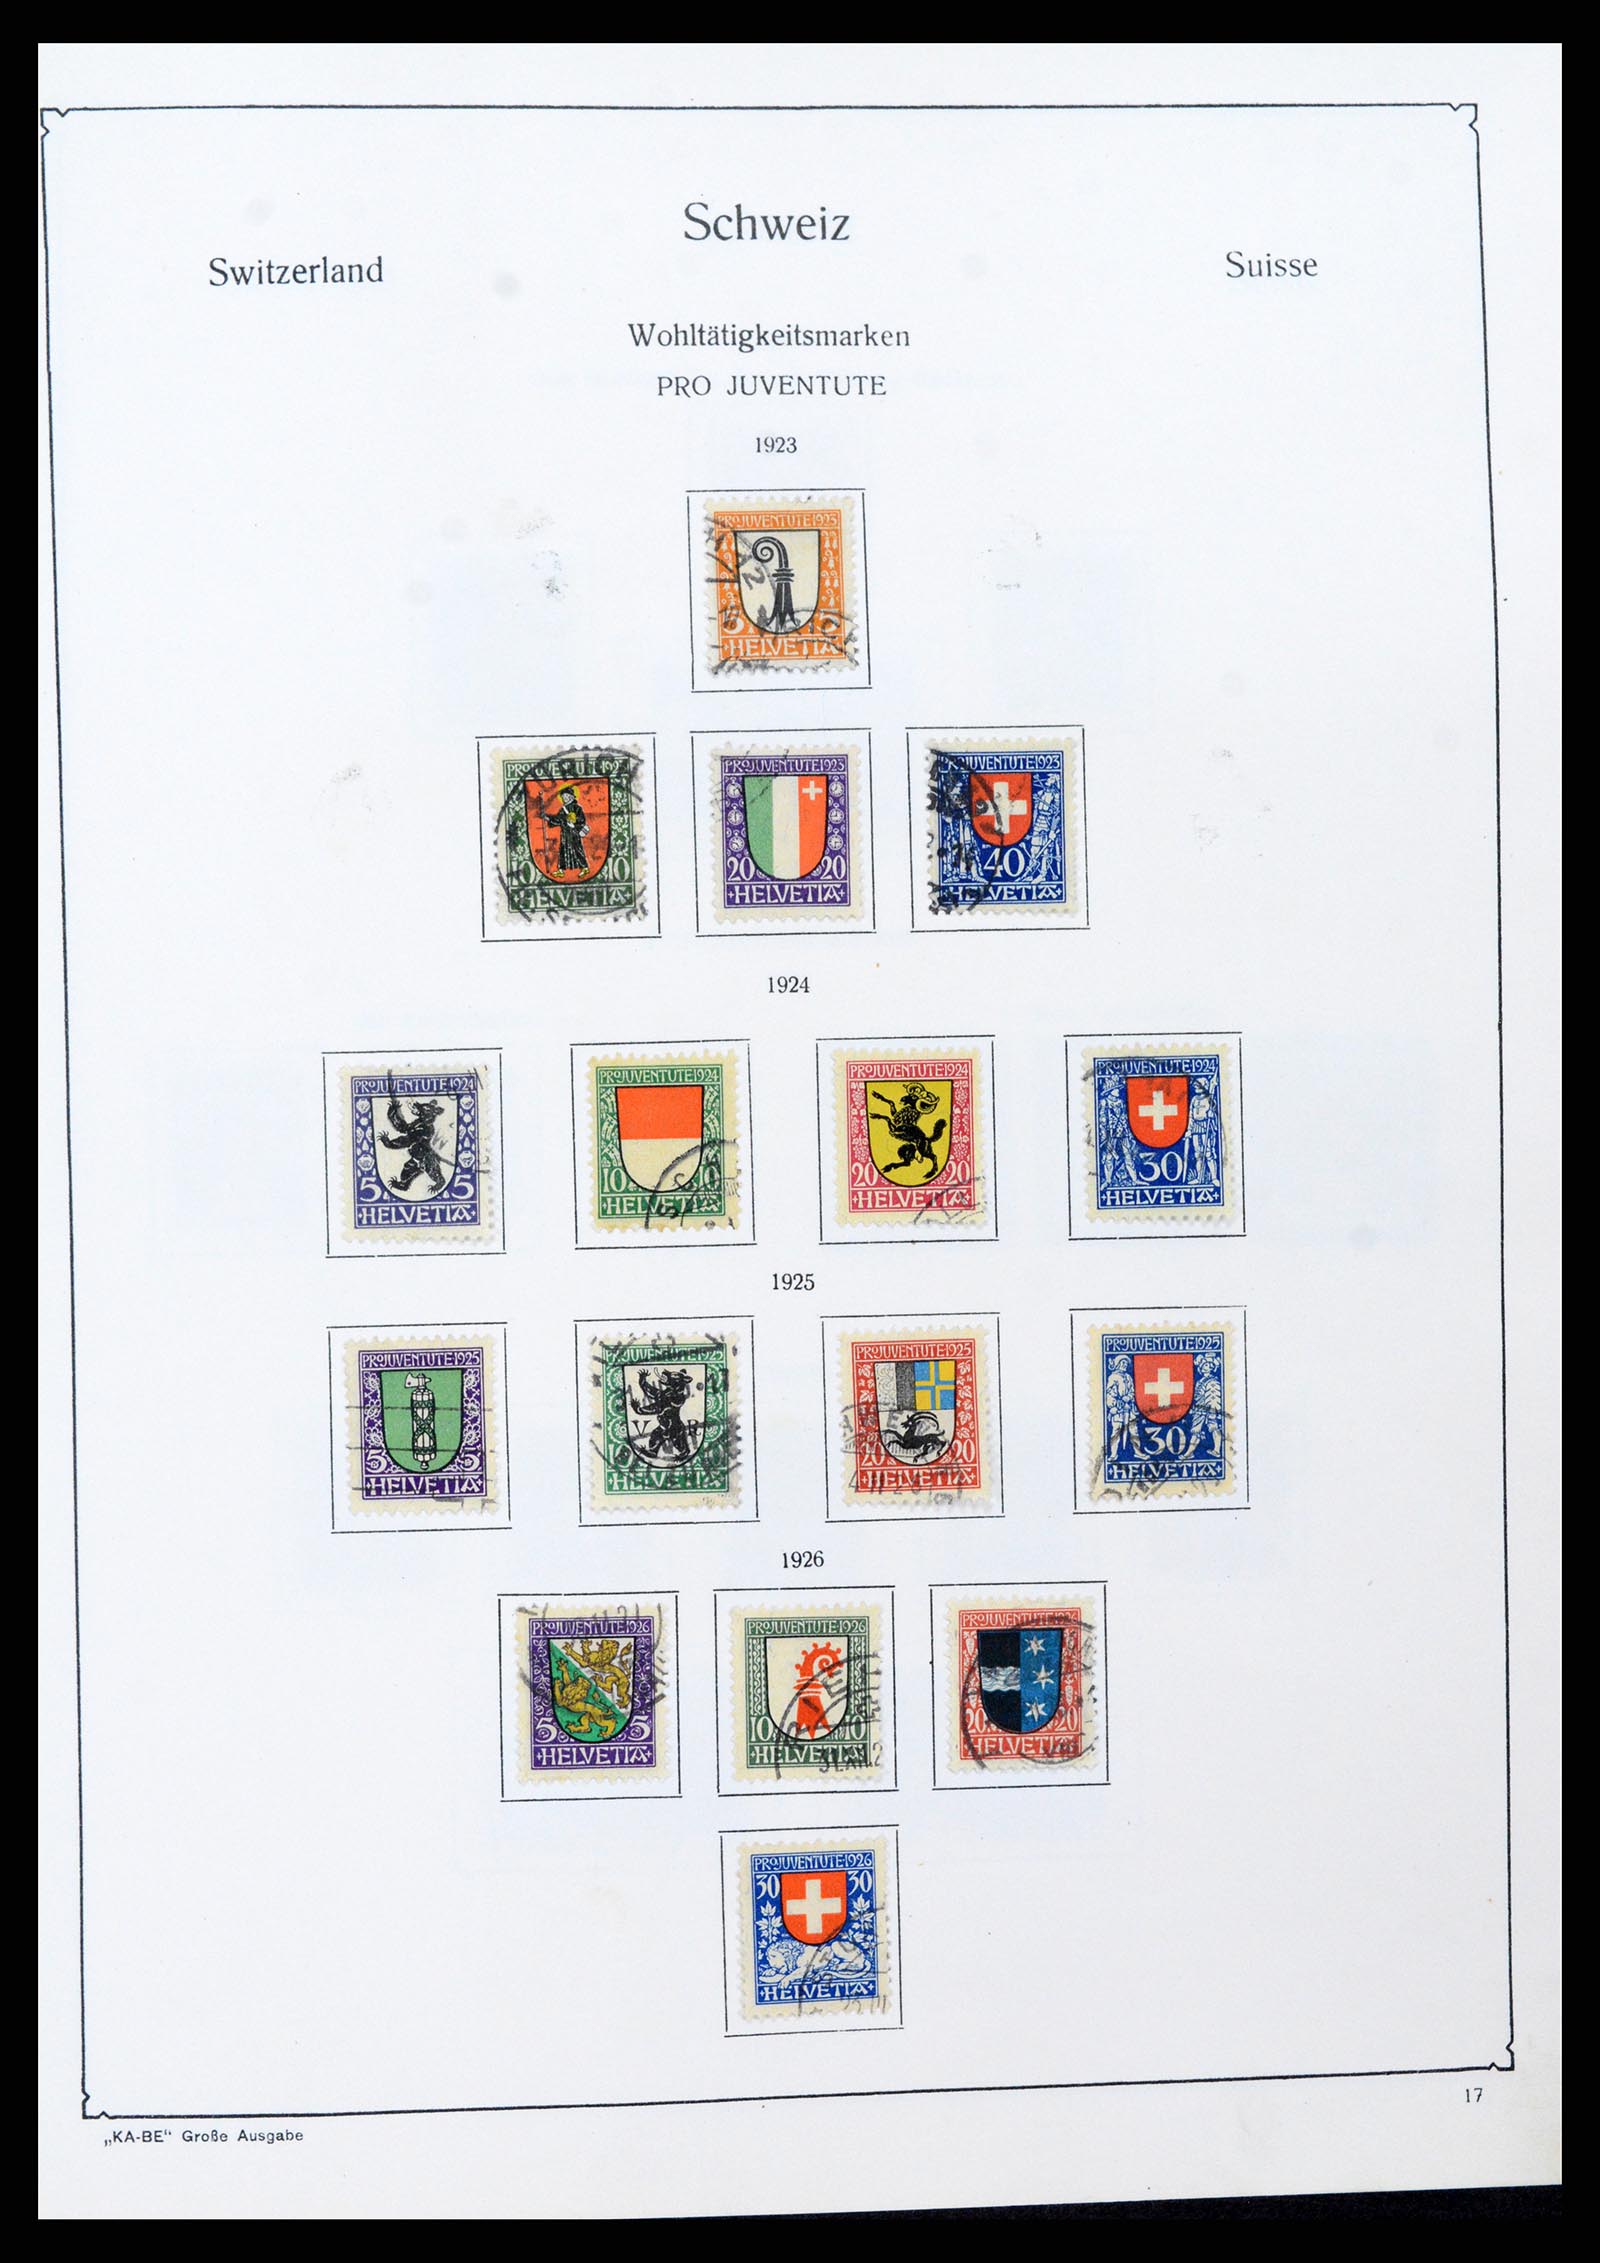 37588 016 - Stamp collection 37588 Switzerland 1854-1974.